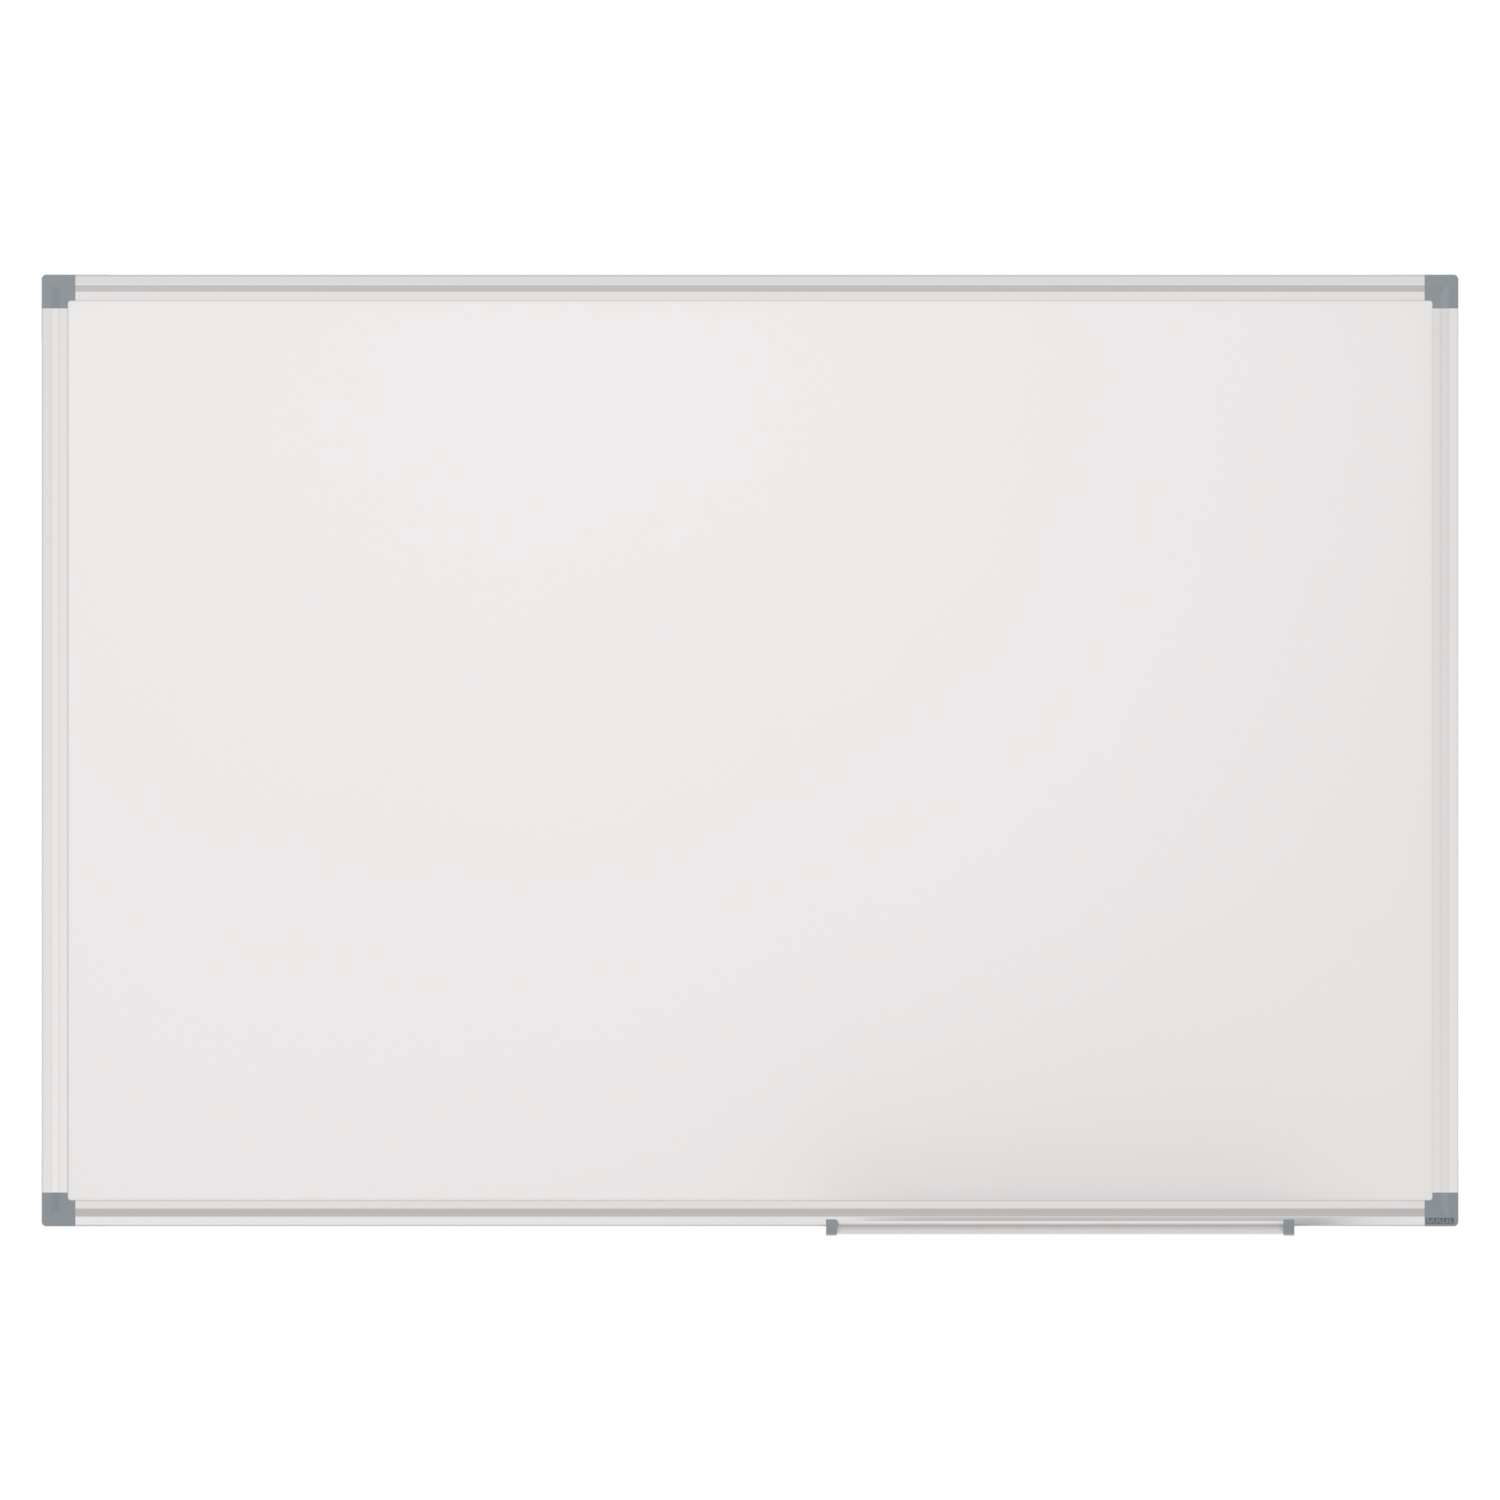 Whiteboard MAULstandard, 100x200 cm